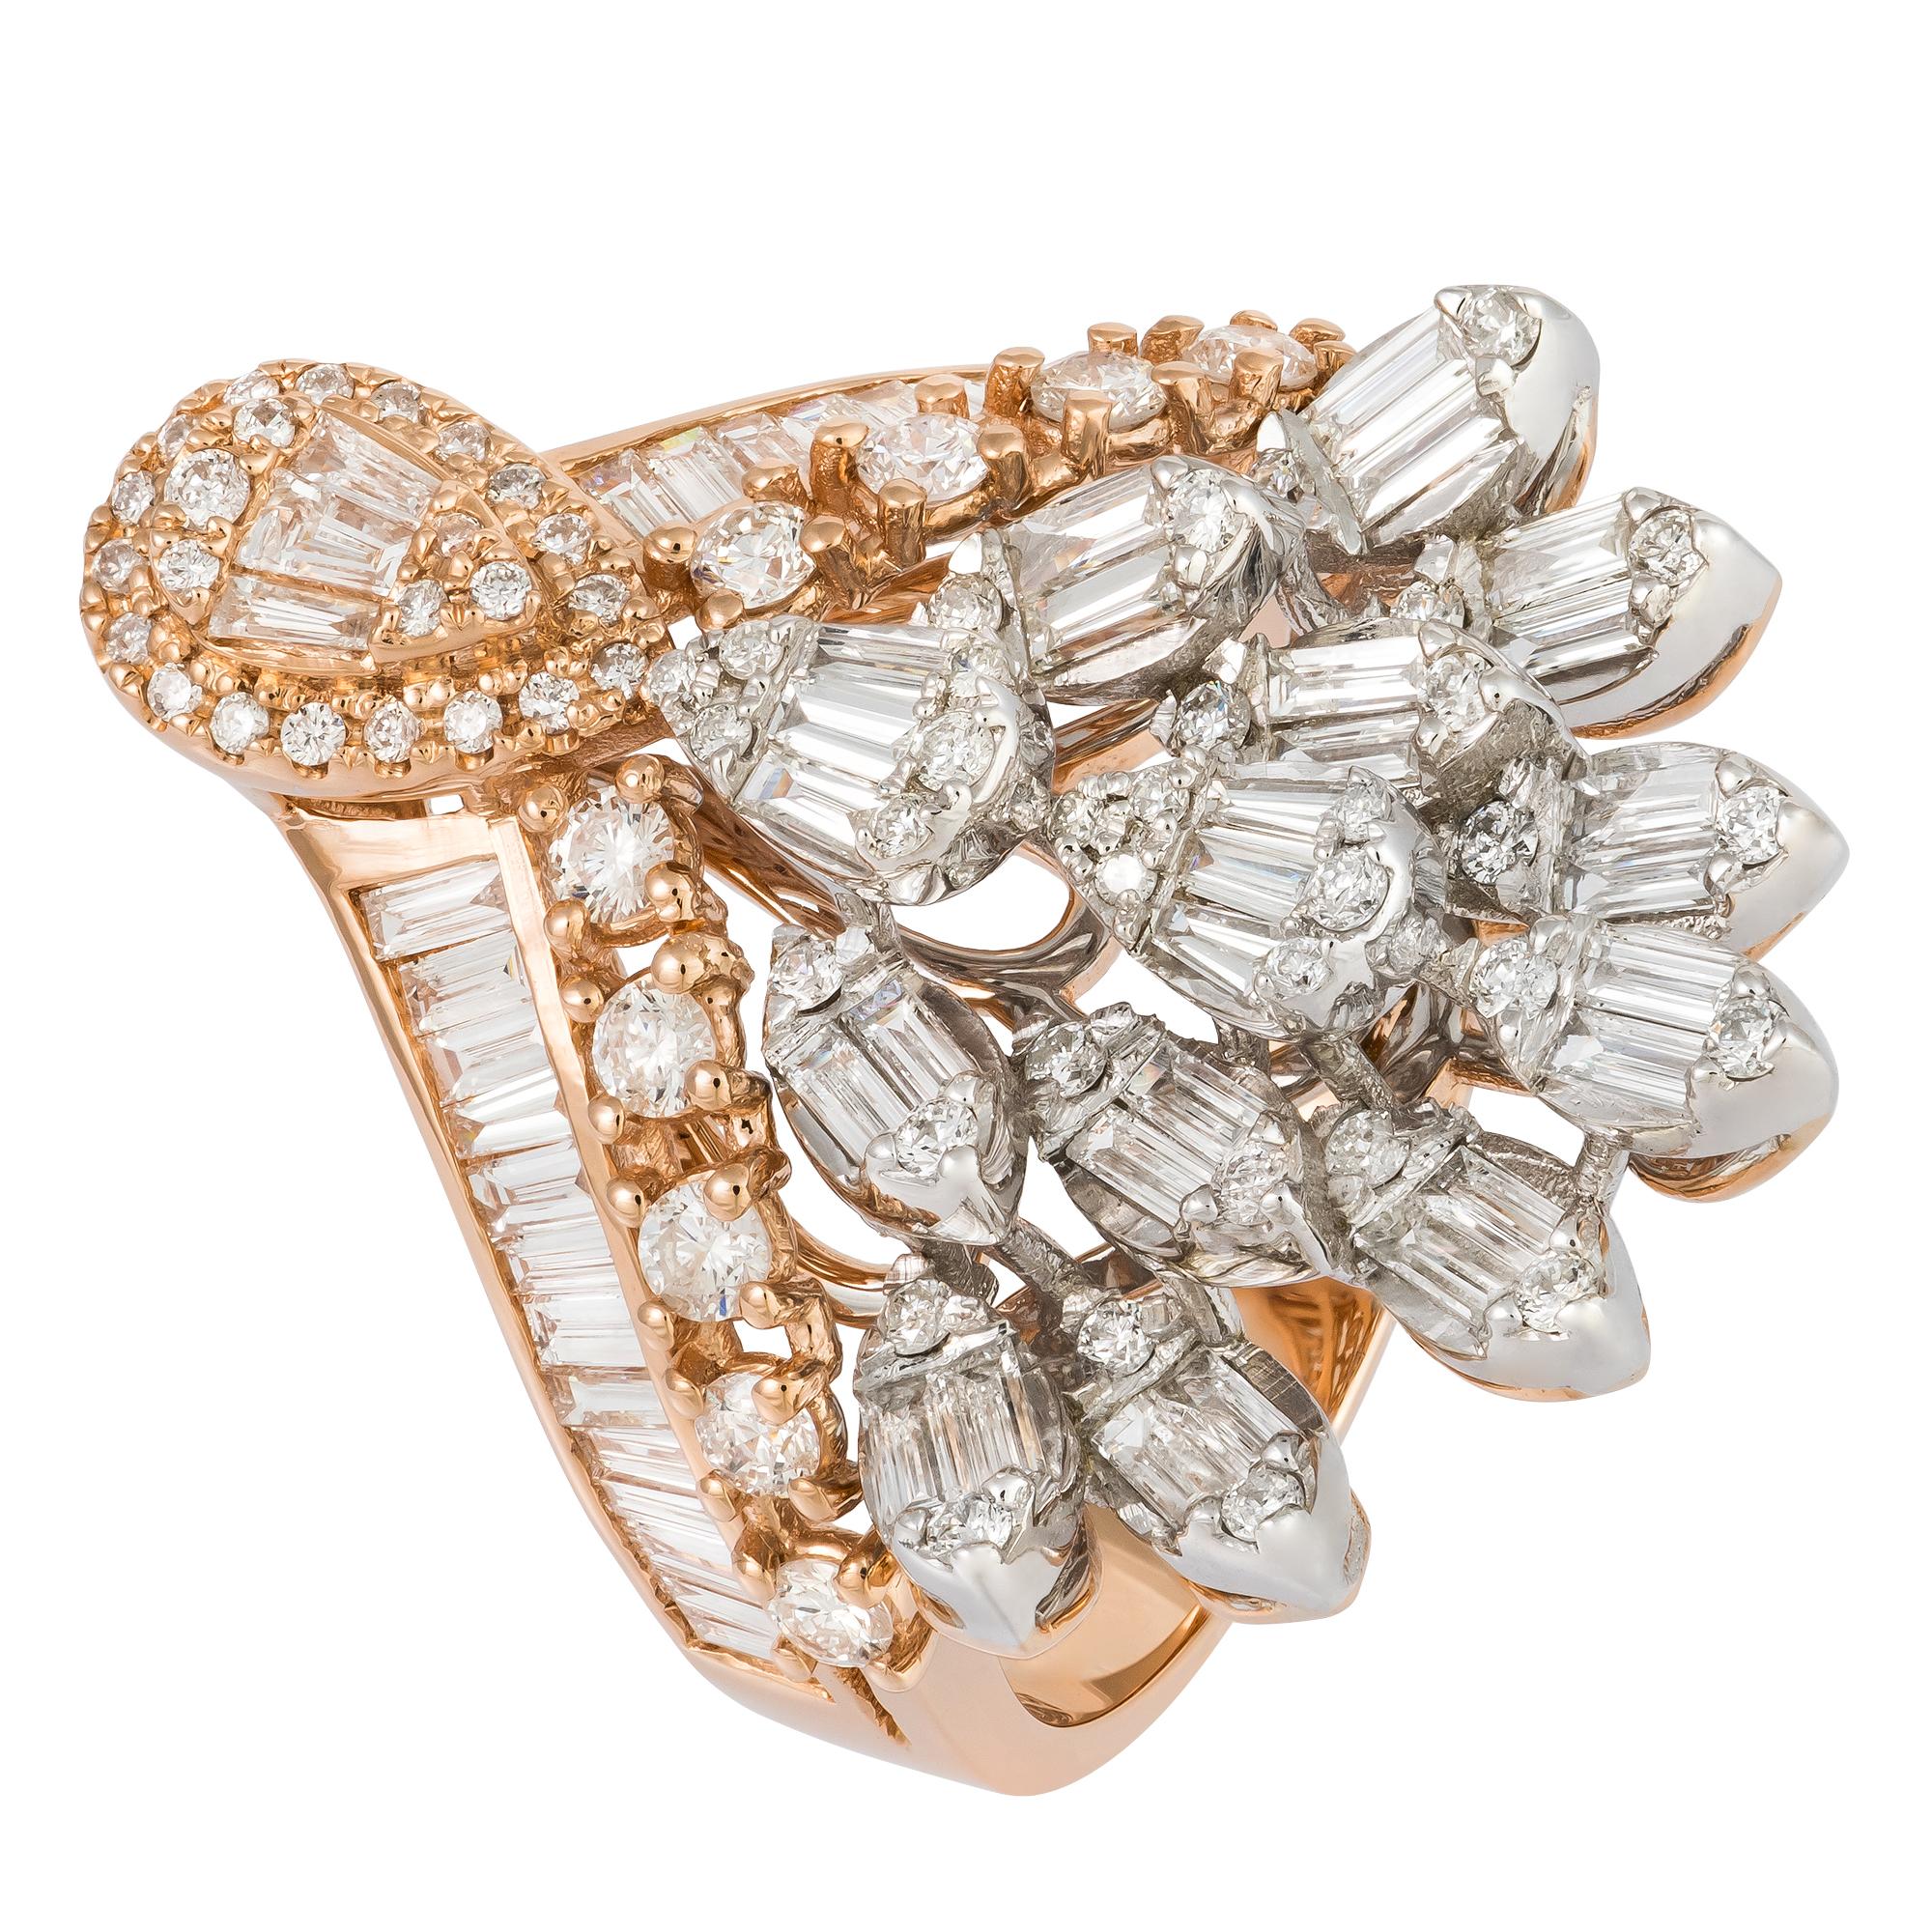 For Sale:  Sparkling  White Pink 18K Gold White Diamond Ring For Her 4